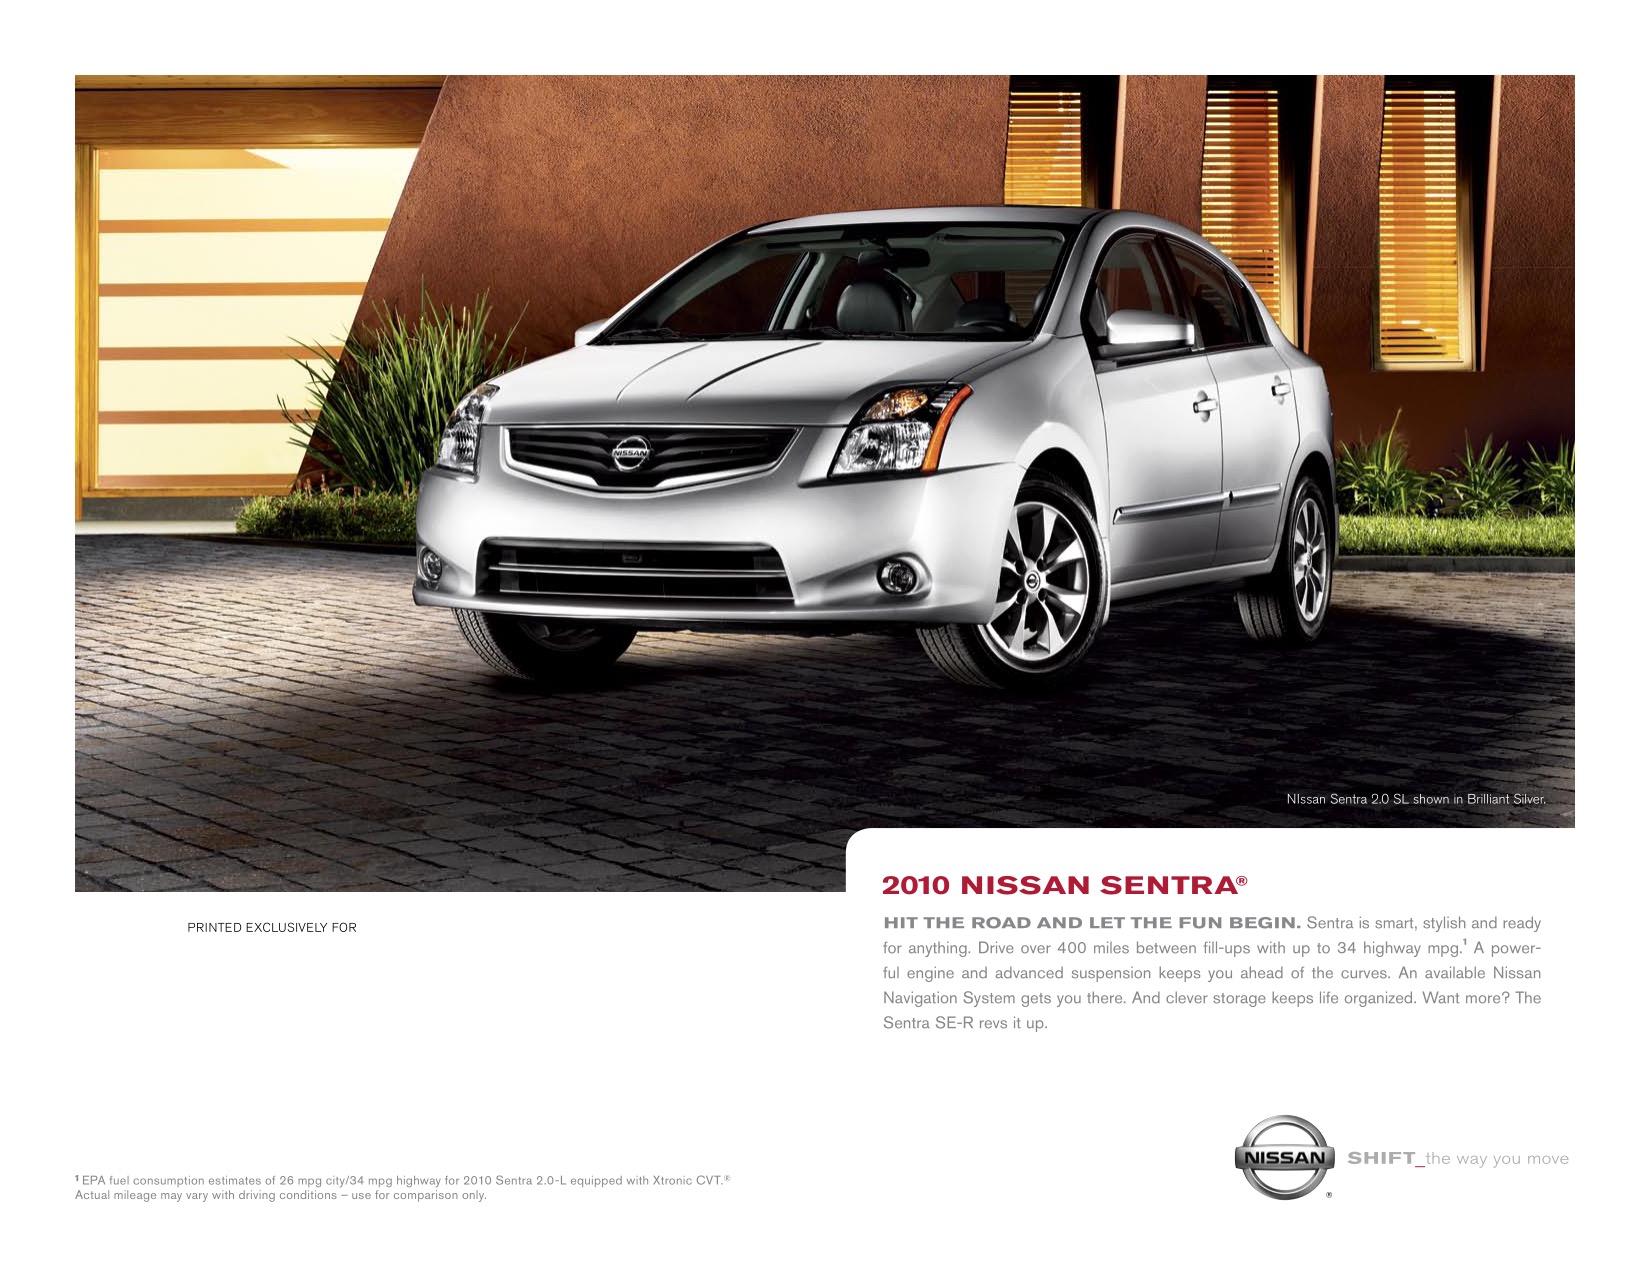 2010 Nissan Sentra Brochure